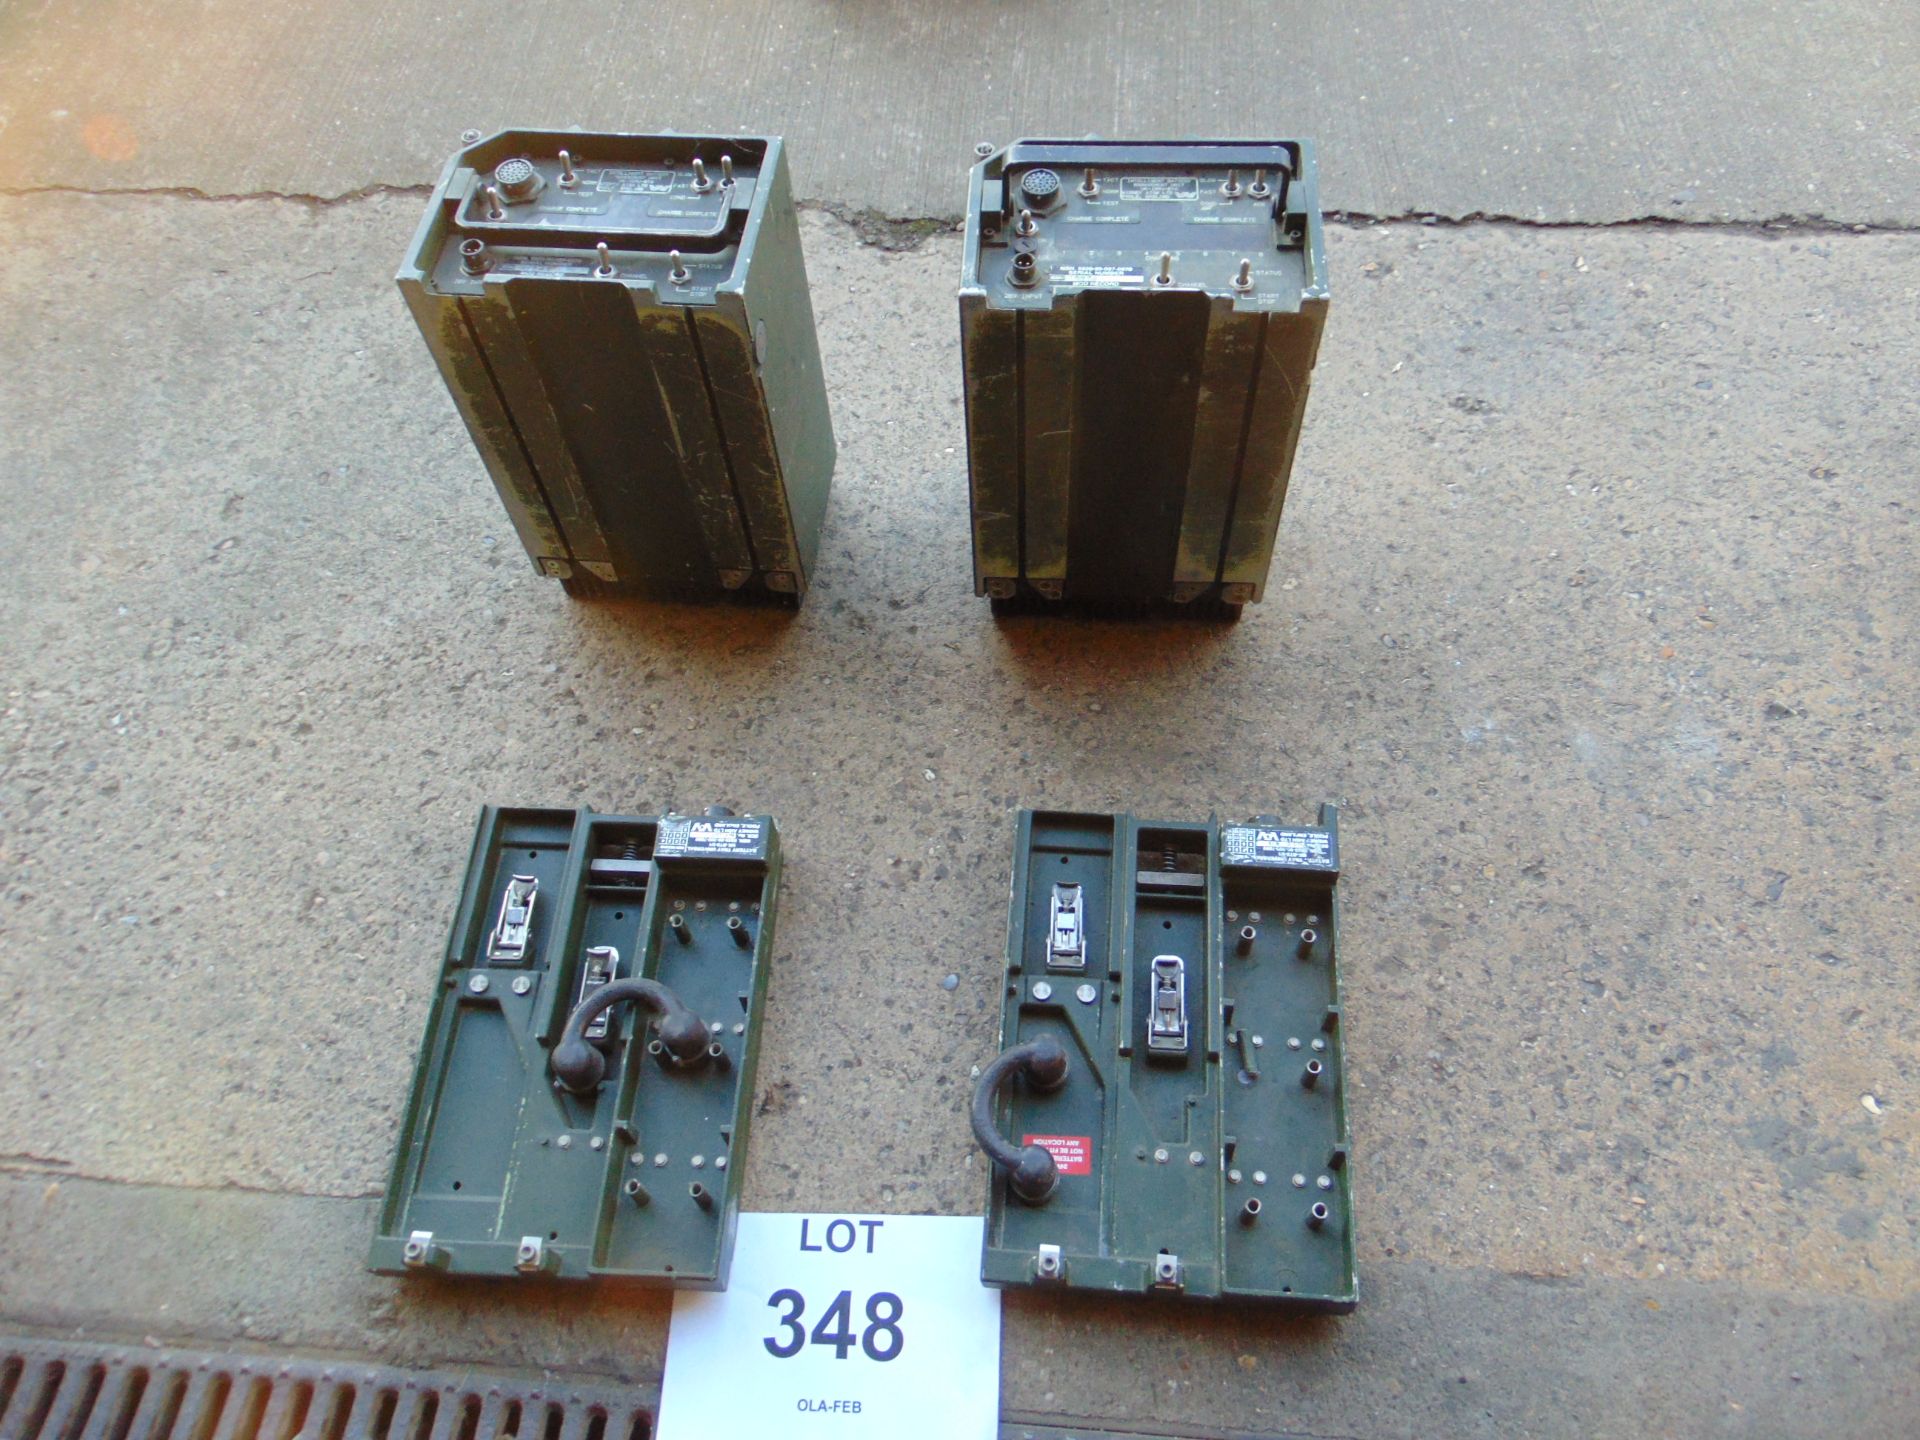 2x Clansman IB MU - 810 Intelligent Battery Management Unit c/w Tray and Leads - Image 2 of 5